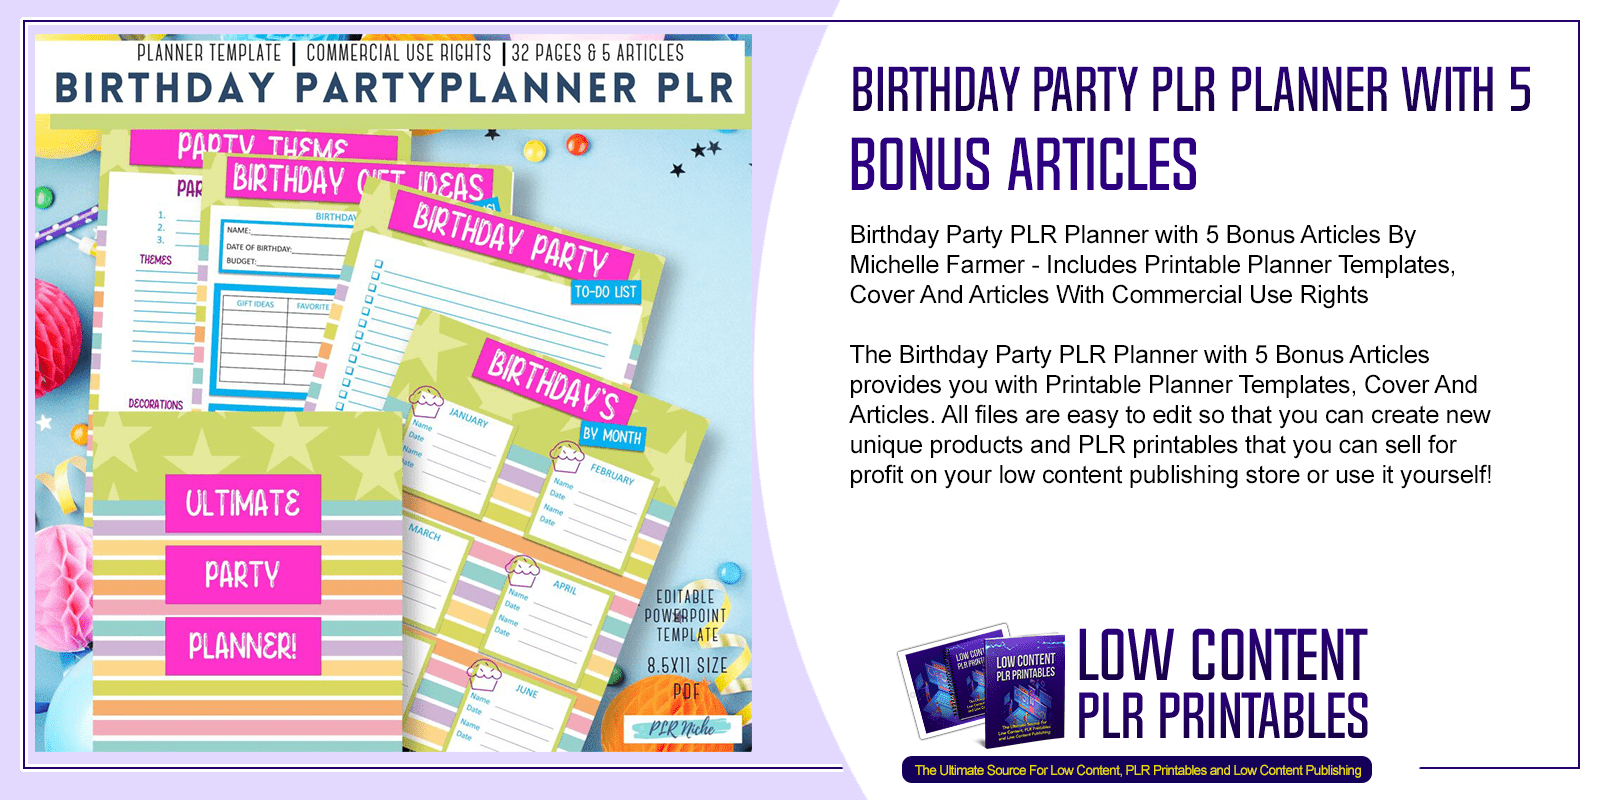 Birthday Party PLR Planner with 5 Bonus Articles